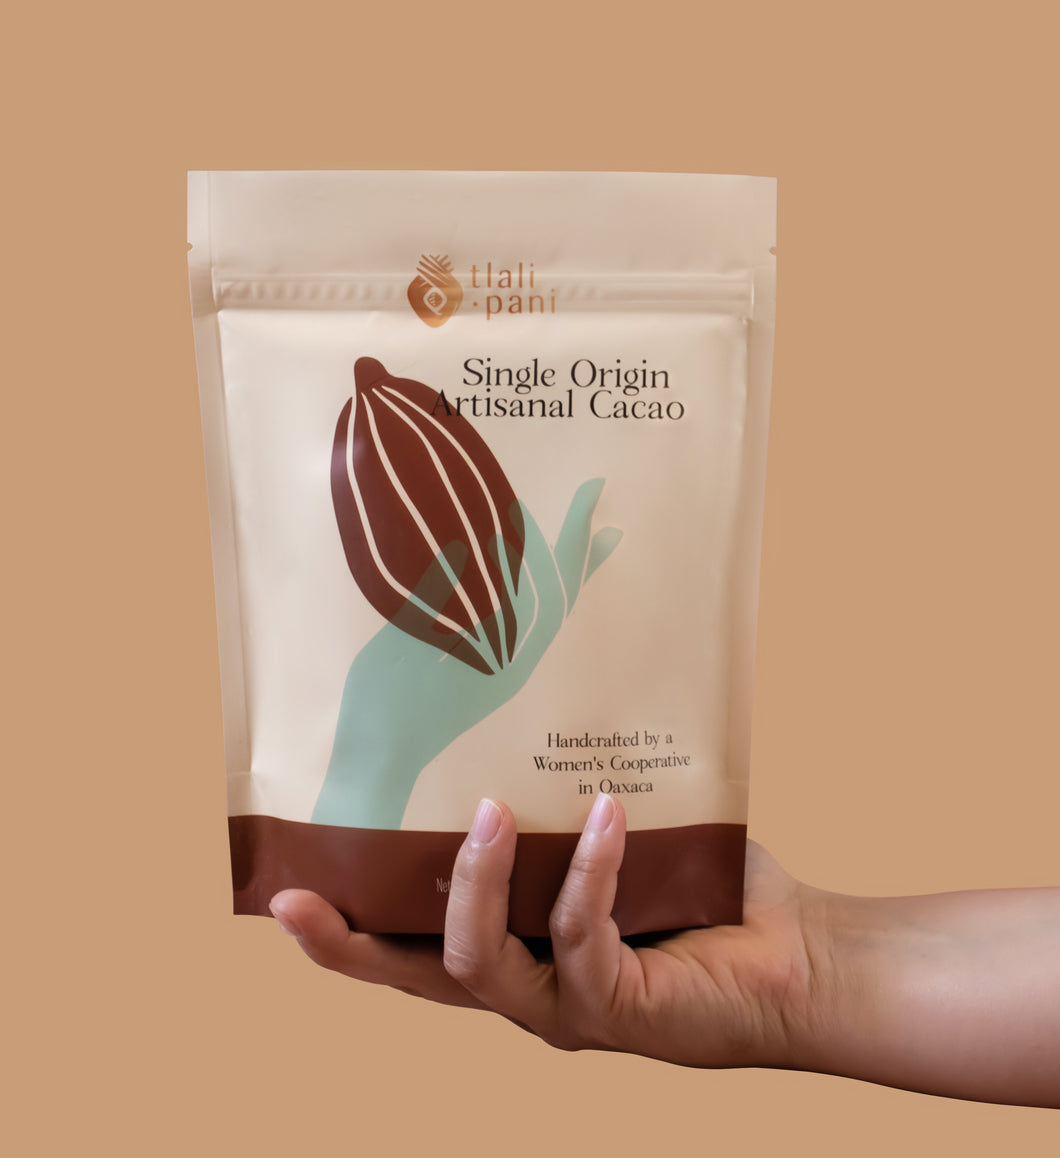 Single Origin Artisanal Cacao Powder